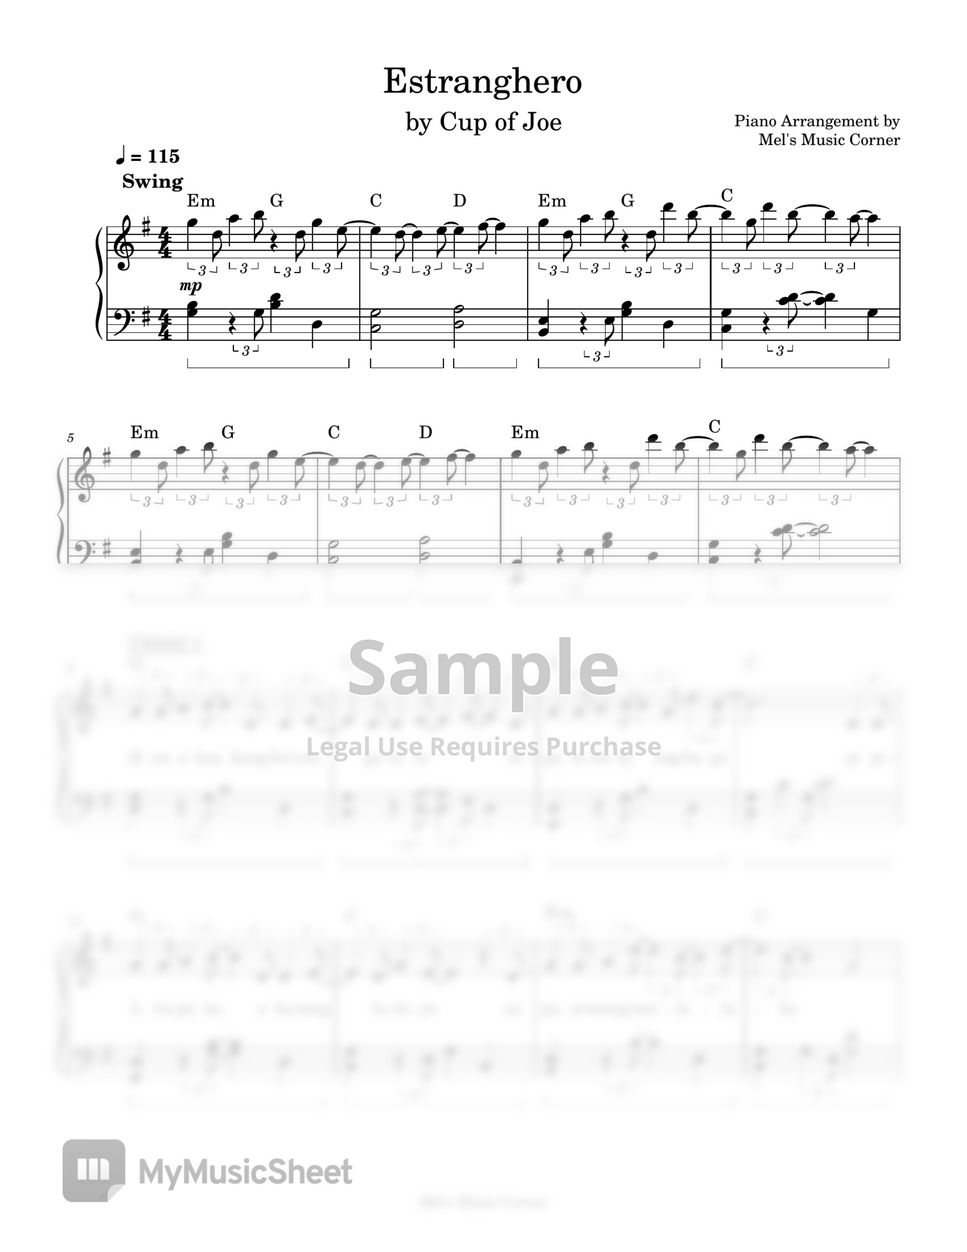 Cup of Joe - Estranghero (piano sheet music) by Mel's Music Corner